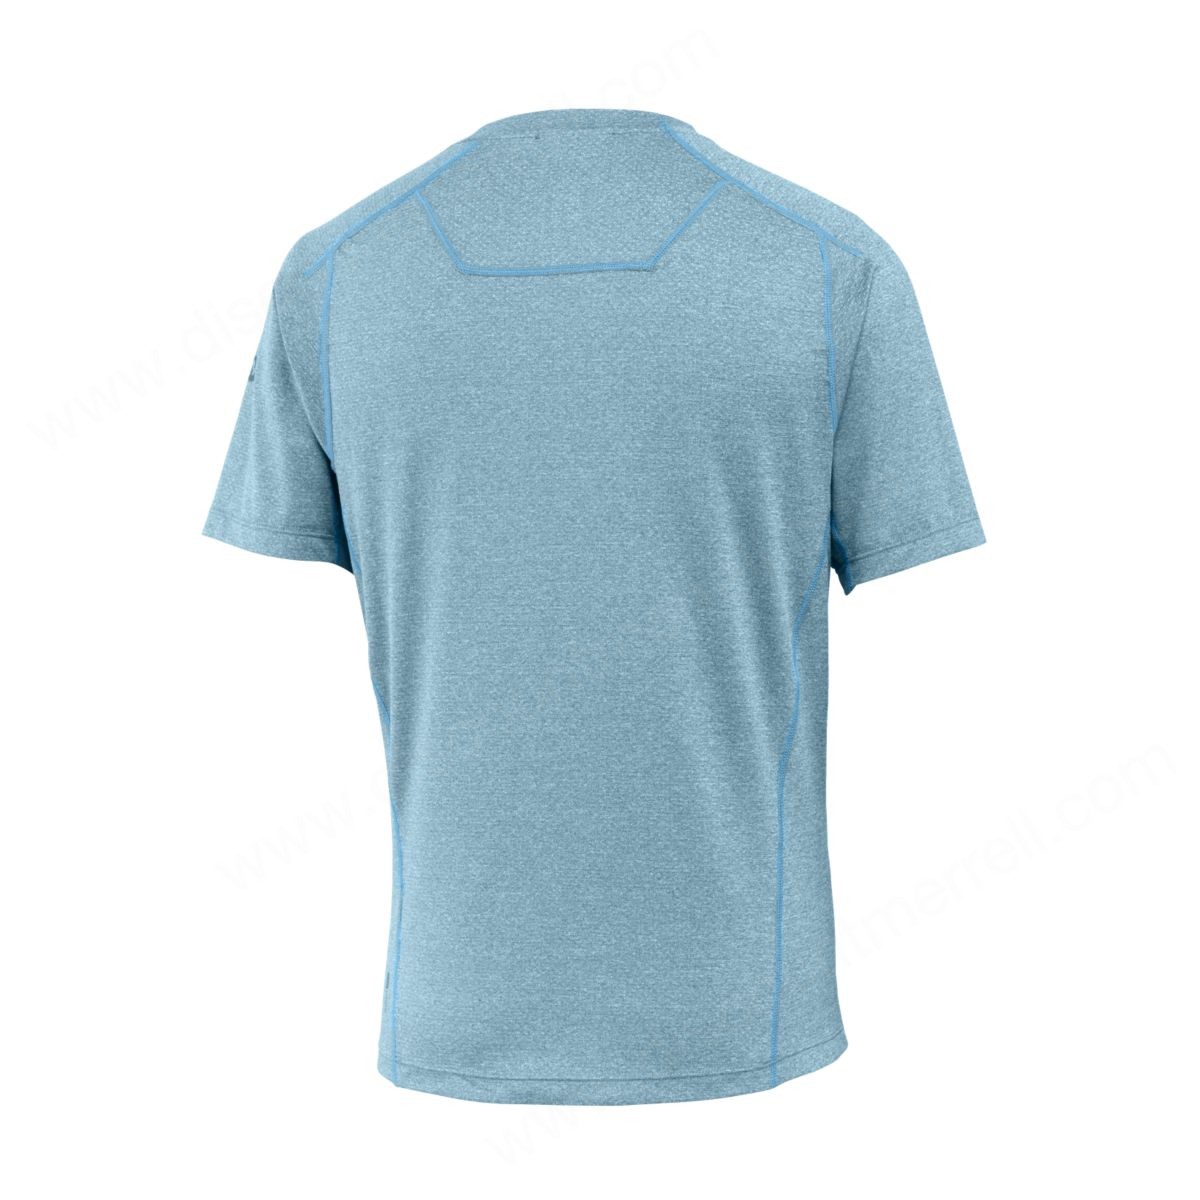 Merrell Men's Torrent Short Sleeve Tech Shirts Legion Blue - -1